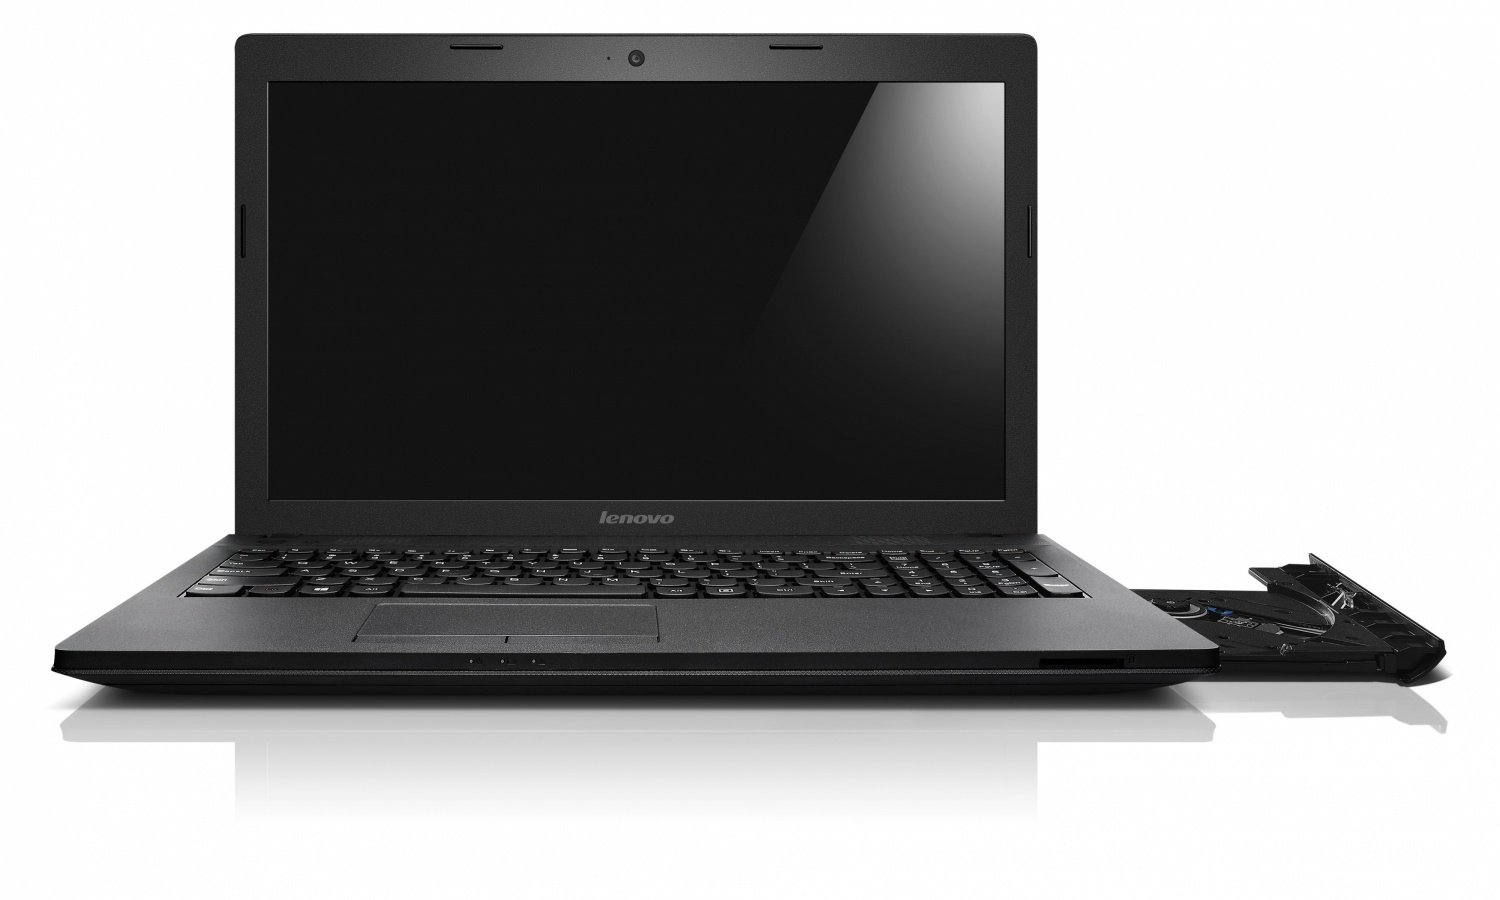 Ноутбук Lenovo Ideapad G500g Отзывы